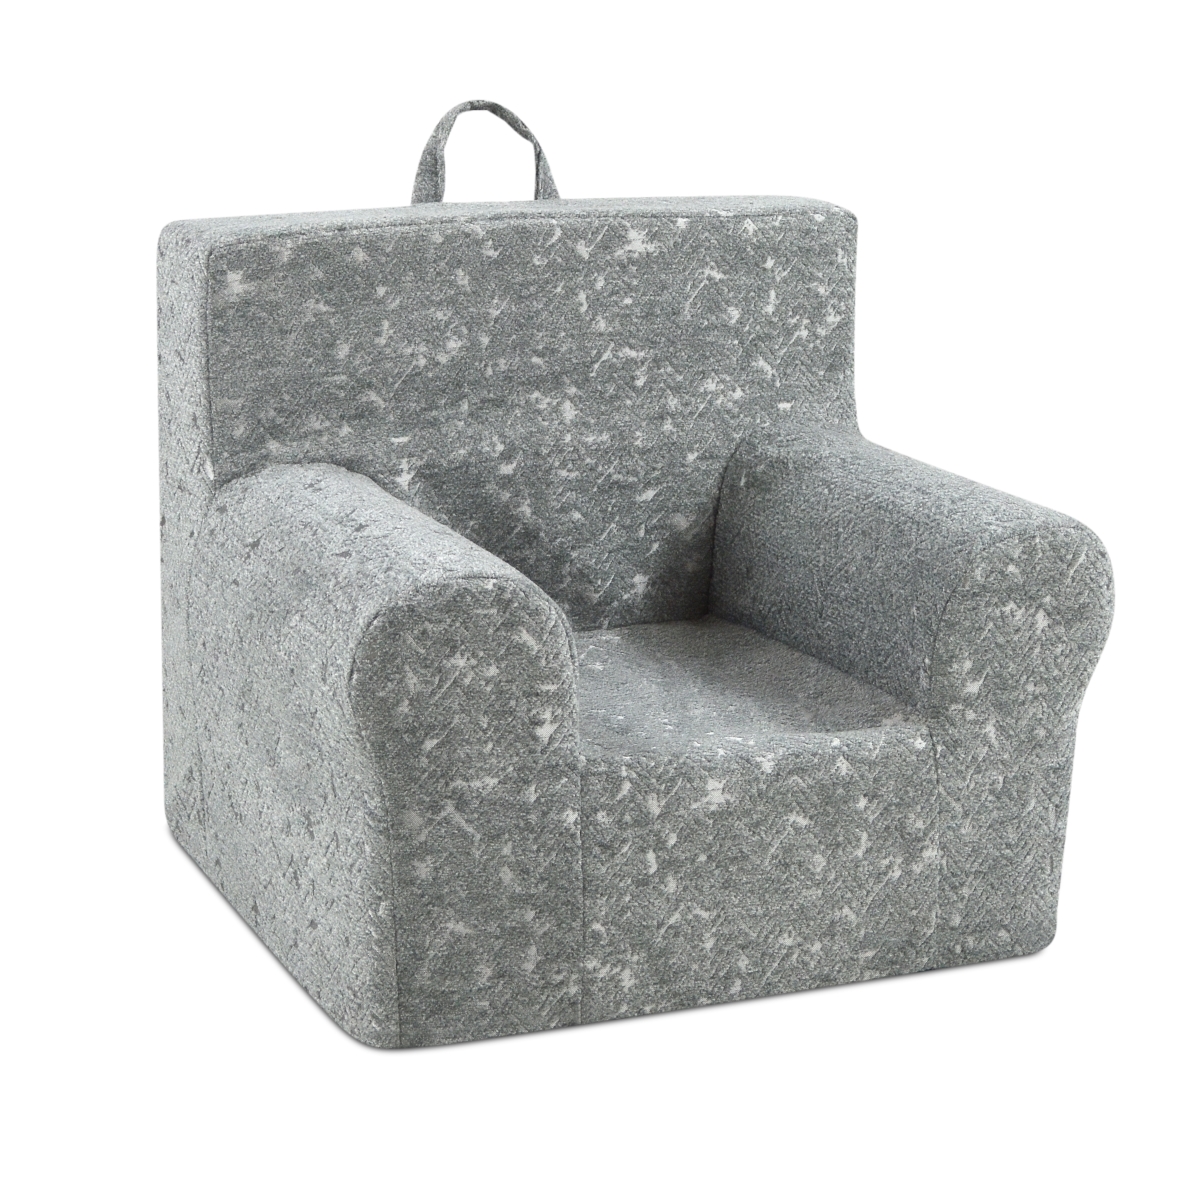 Kangaroo Trading 4078ldz Weston Kids Grab-n-go Foam Chair With Handle & Limerick Drizzle - Grey